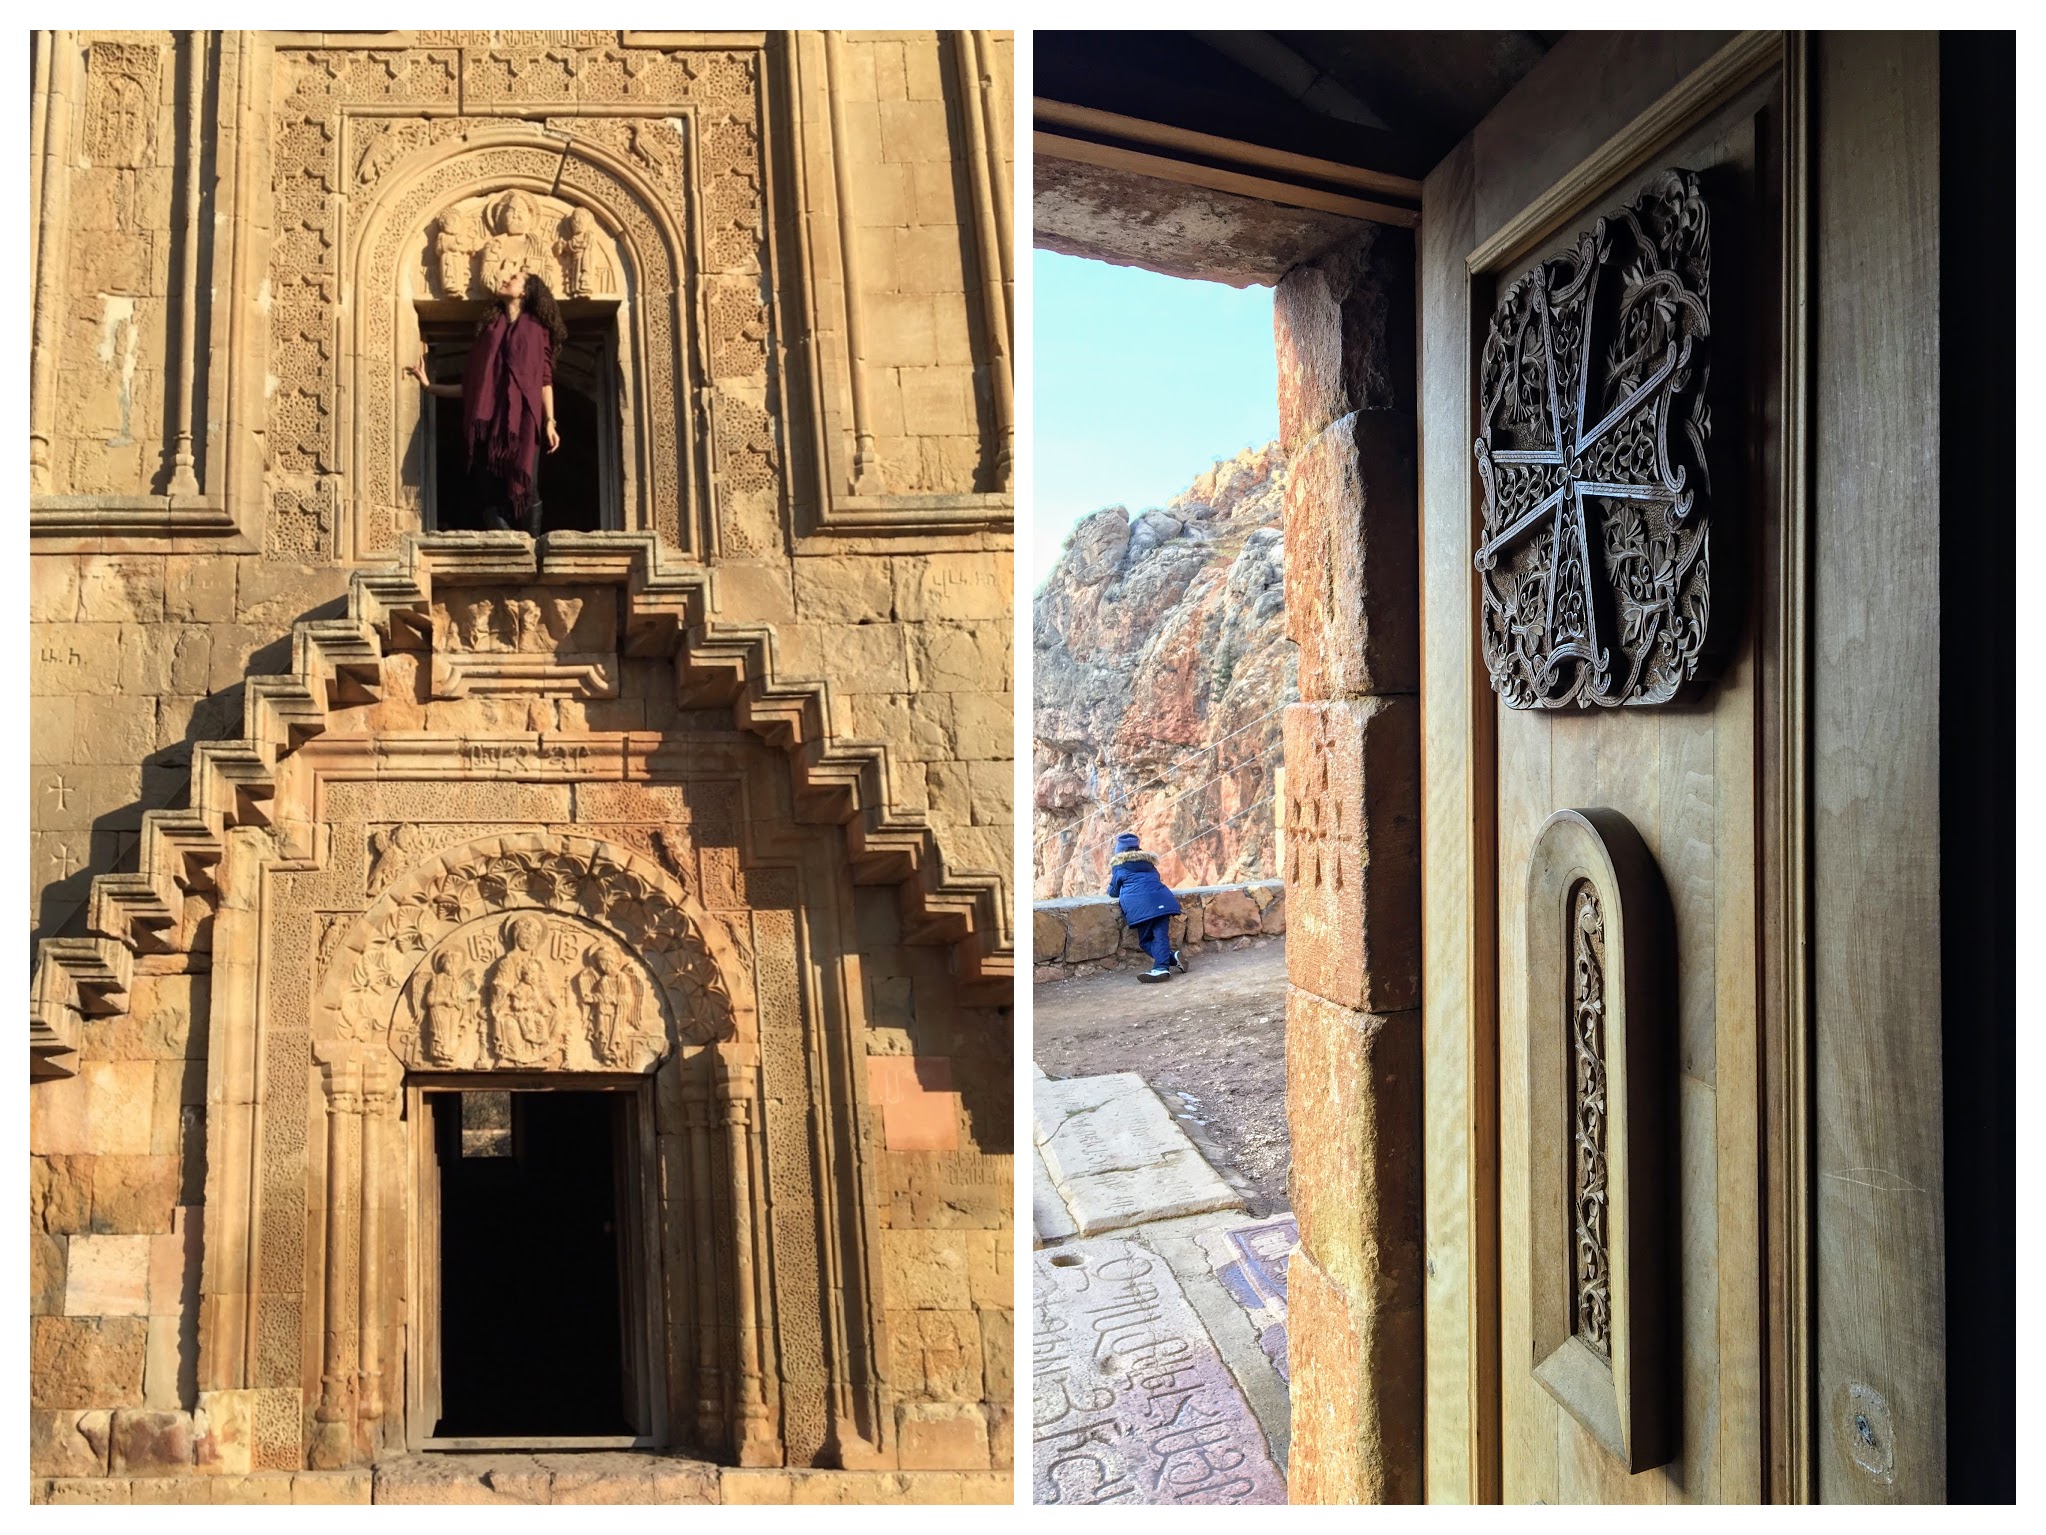 Exploring the Noravank Monastery in Armenia